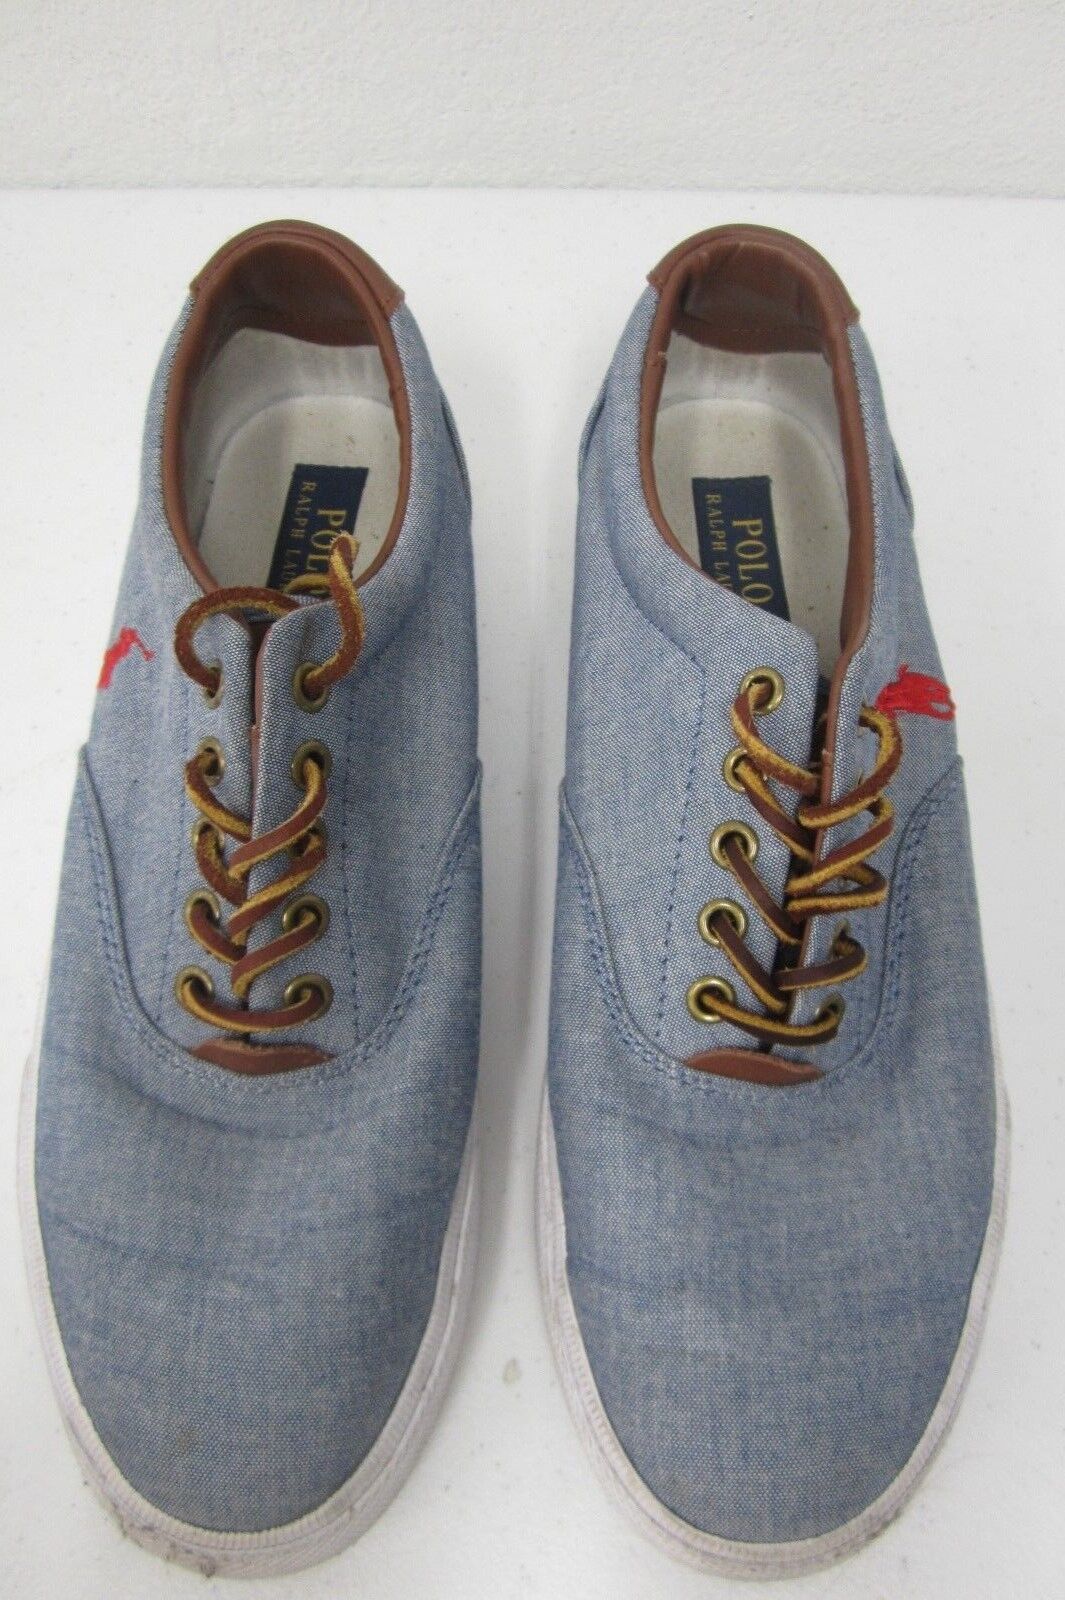 Polo Ralph Lauren Vaughn Blue Chambray Canvas Sneakers Leather Laces Shoes Sz 9D